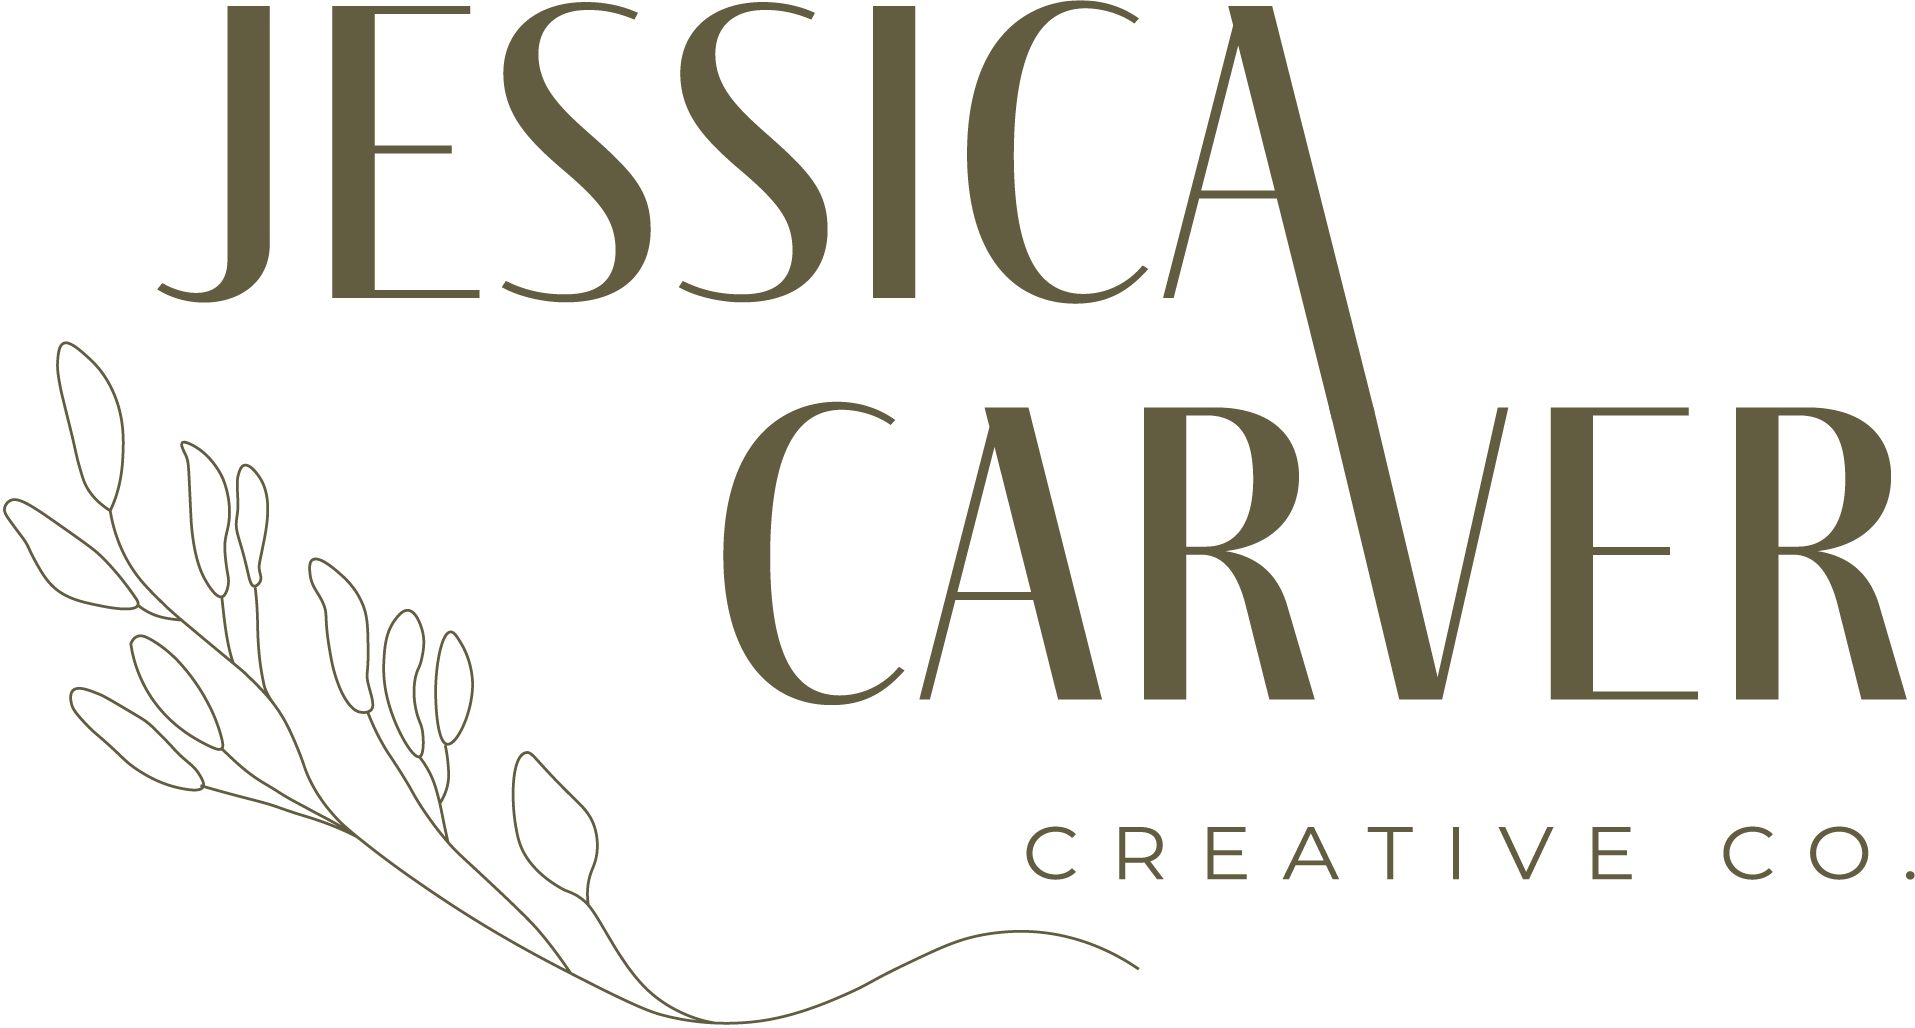 Jessica Carver Creative Co.